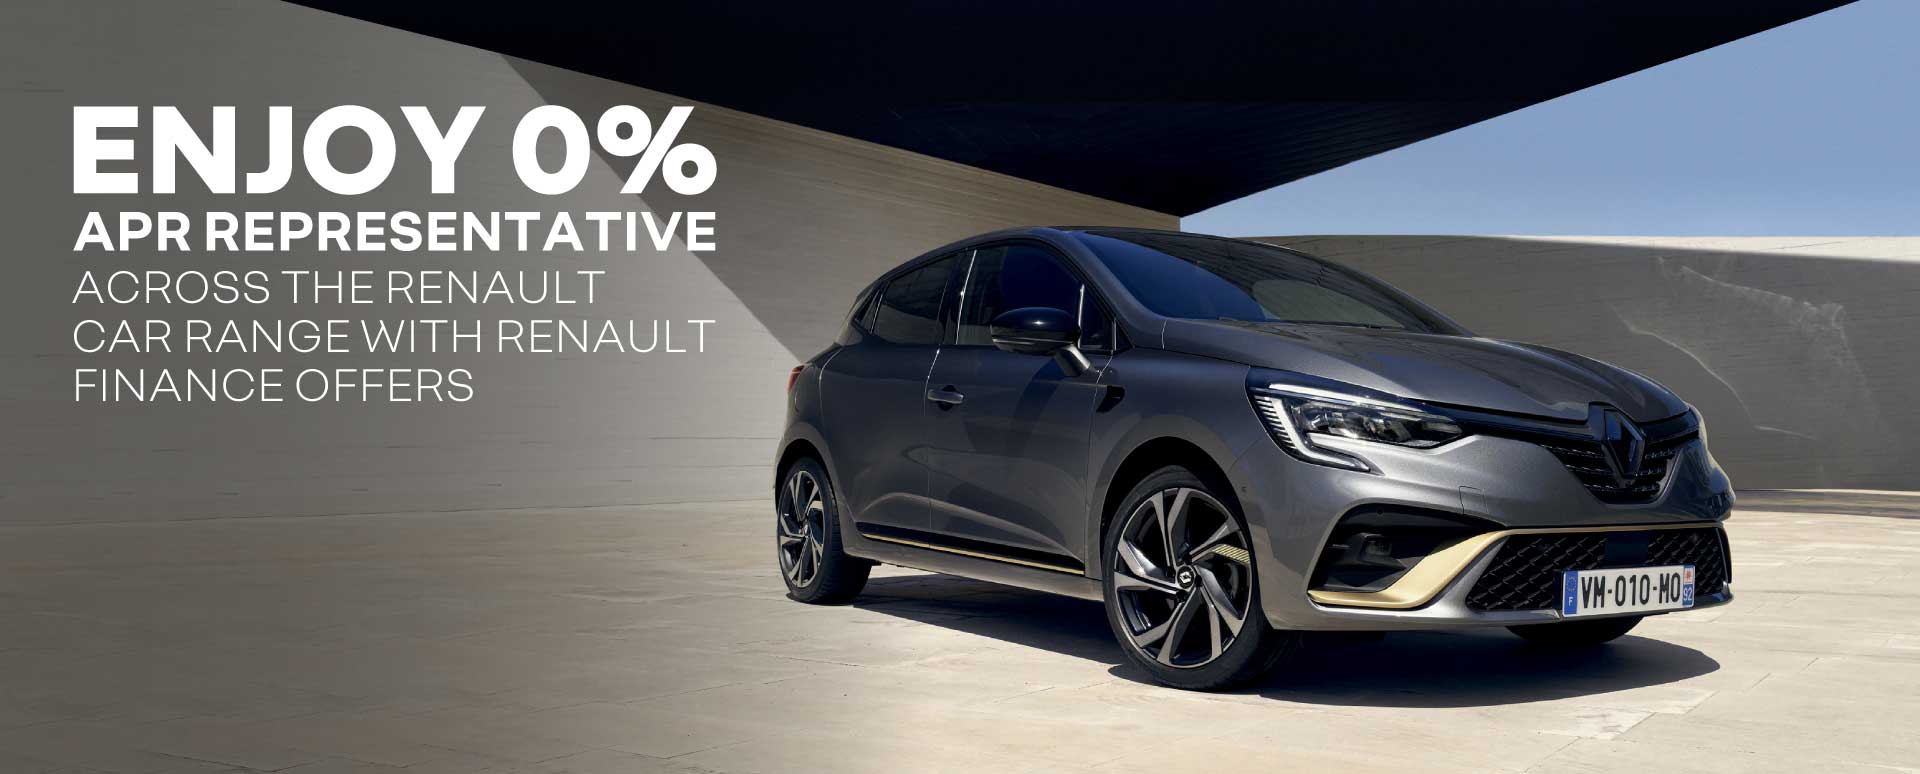 Renault 0% APR